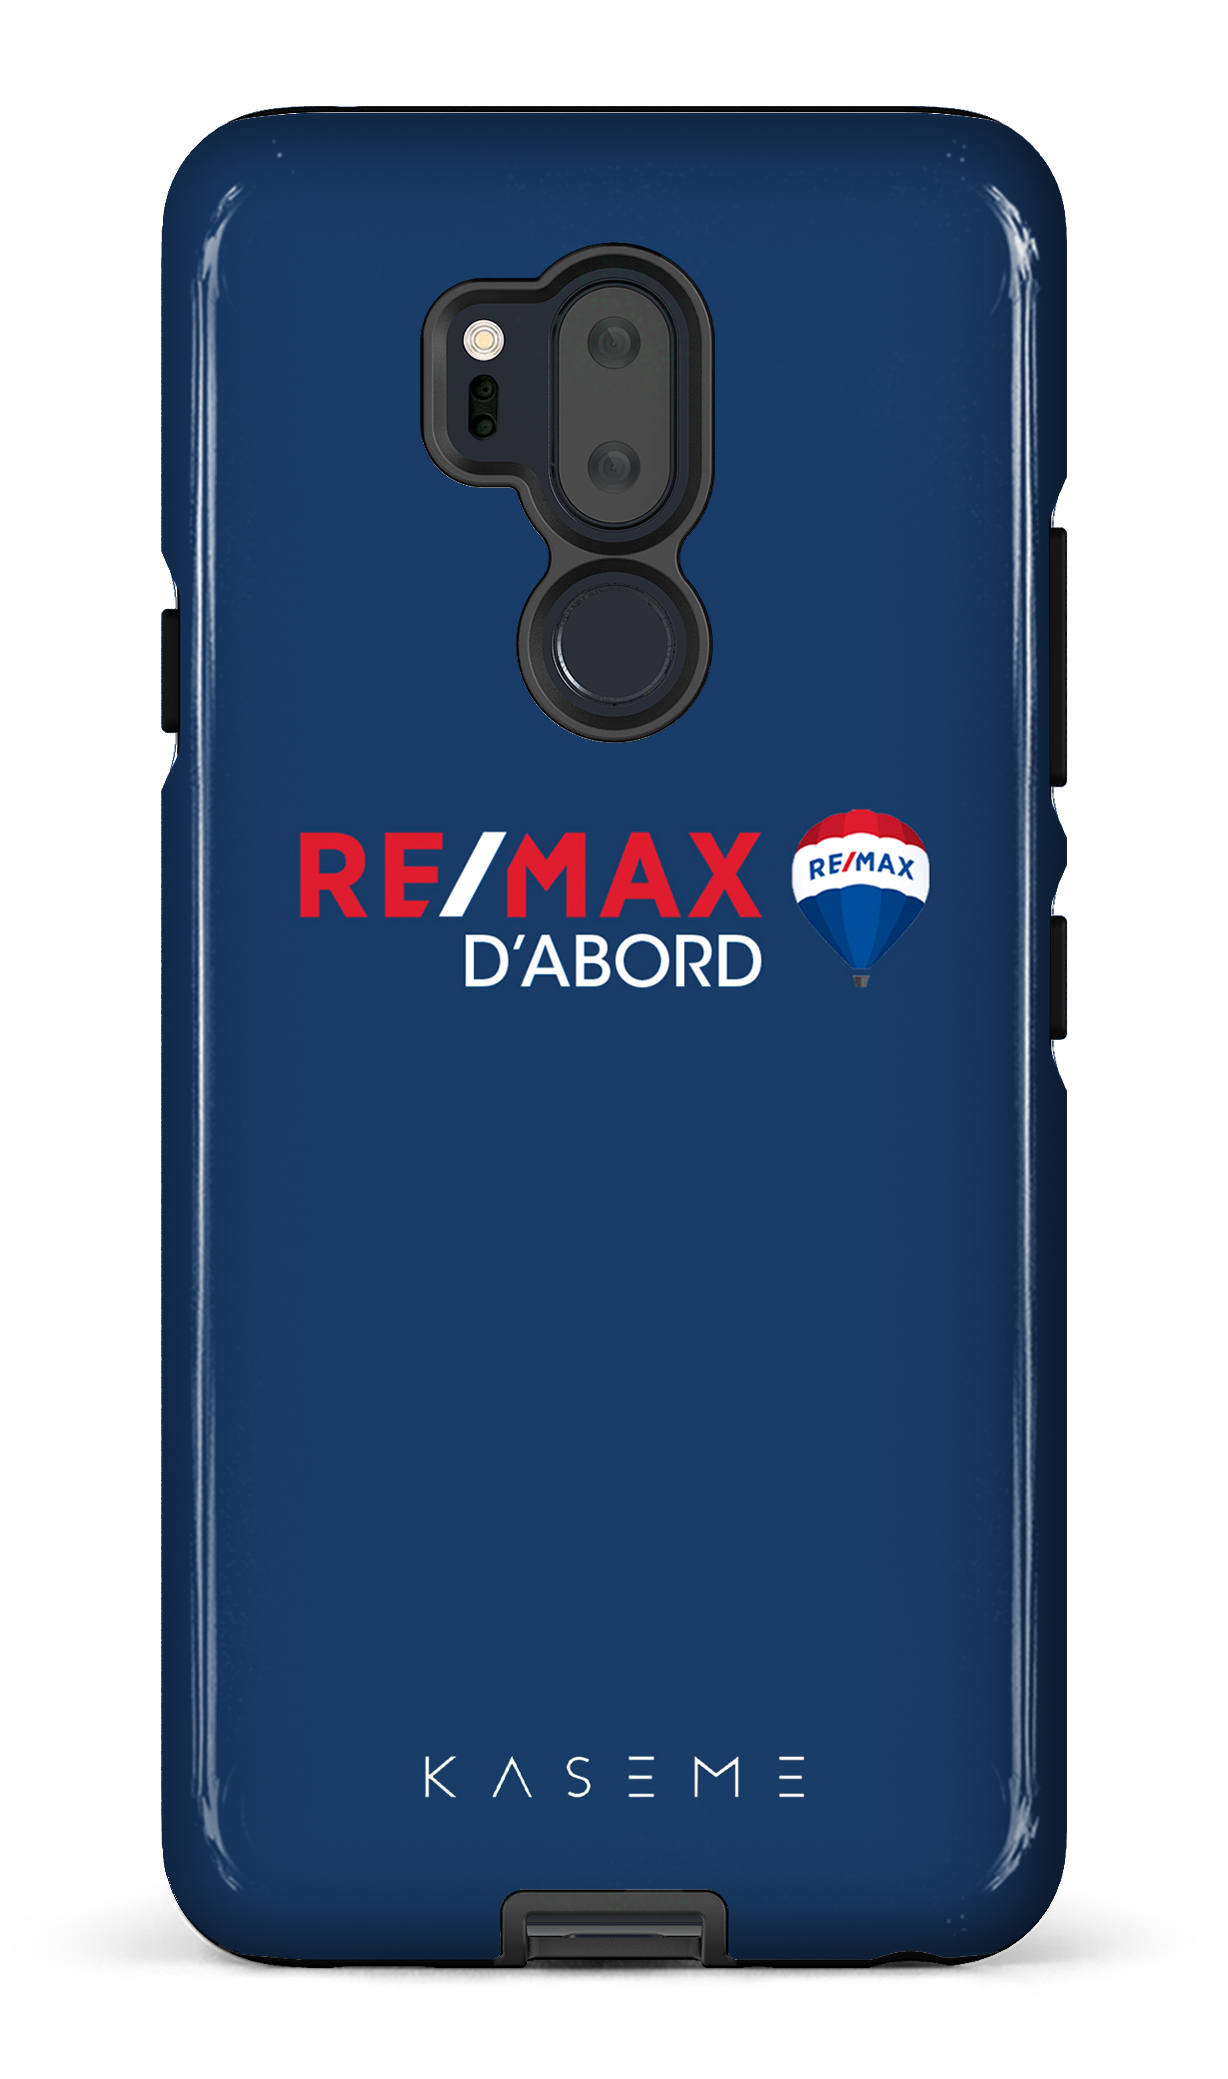 Remax D'abord Bleu - LG G7